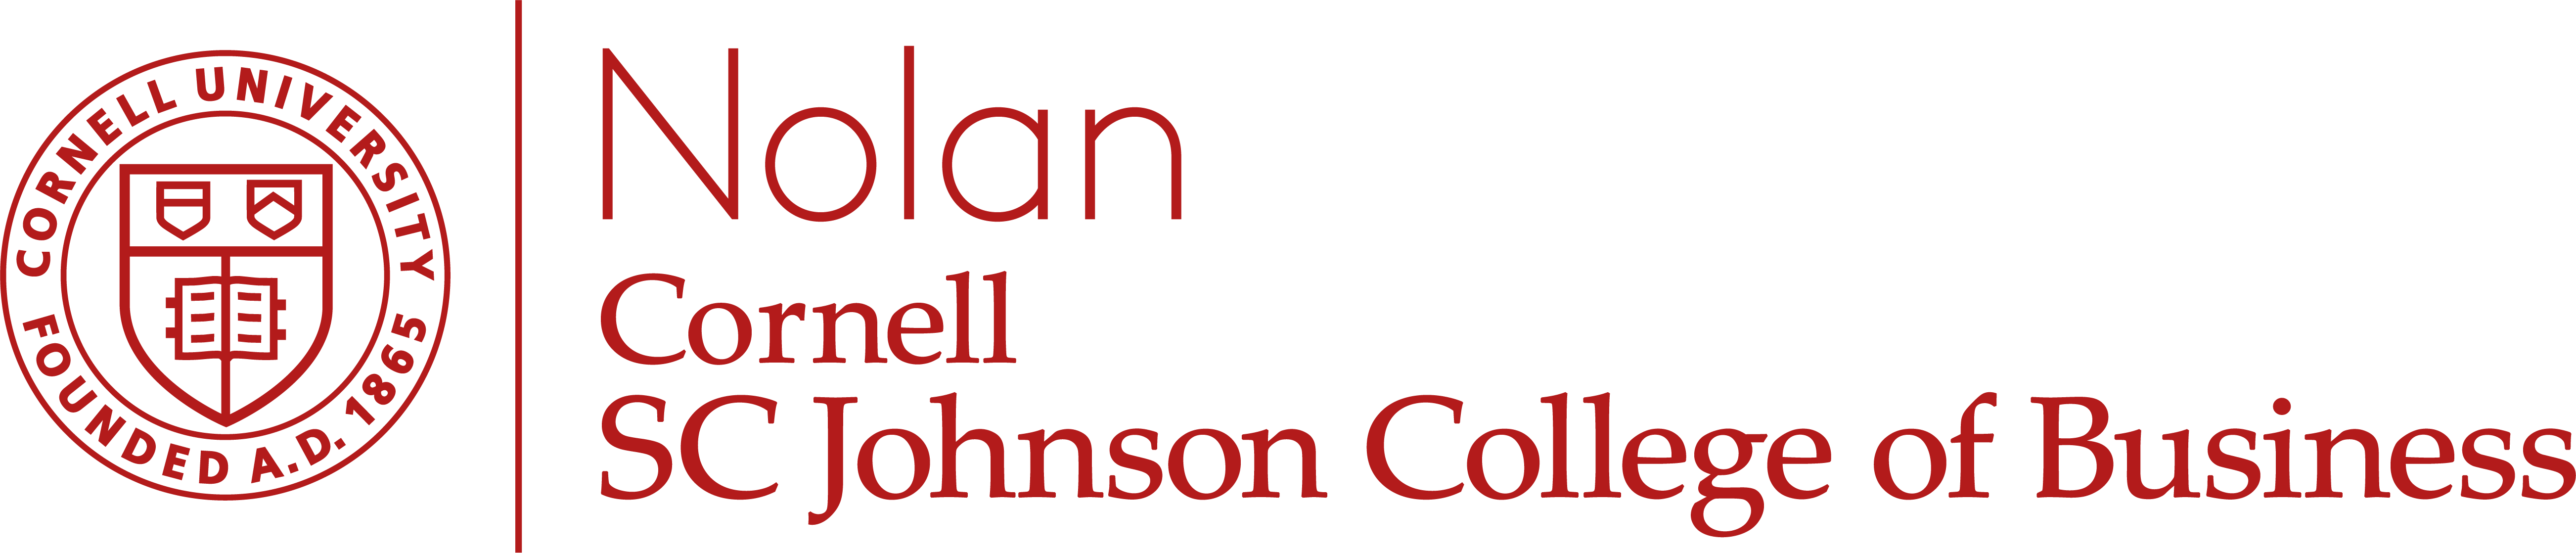 Nolan Cornell SC Johnson College of Business